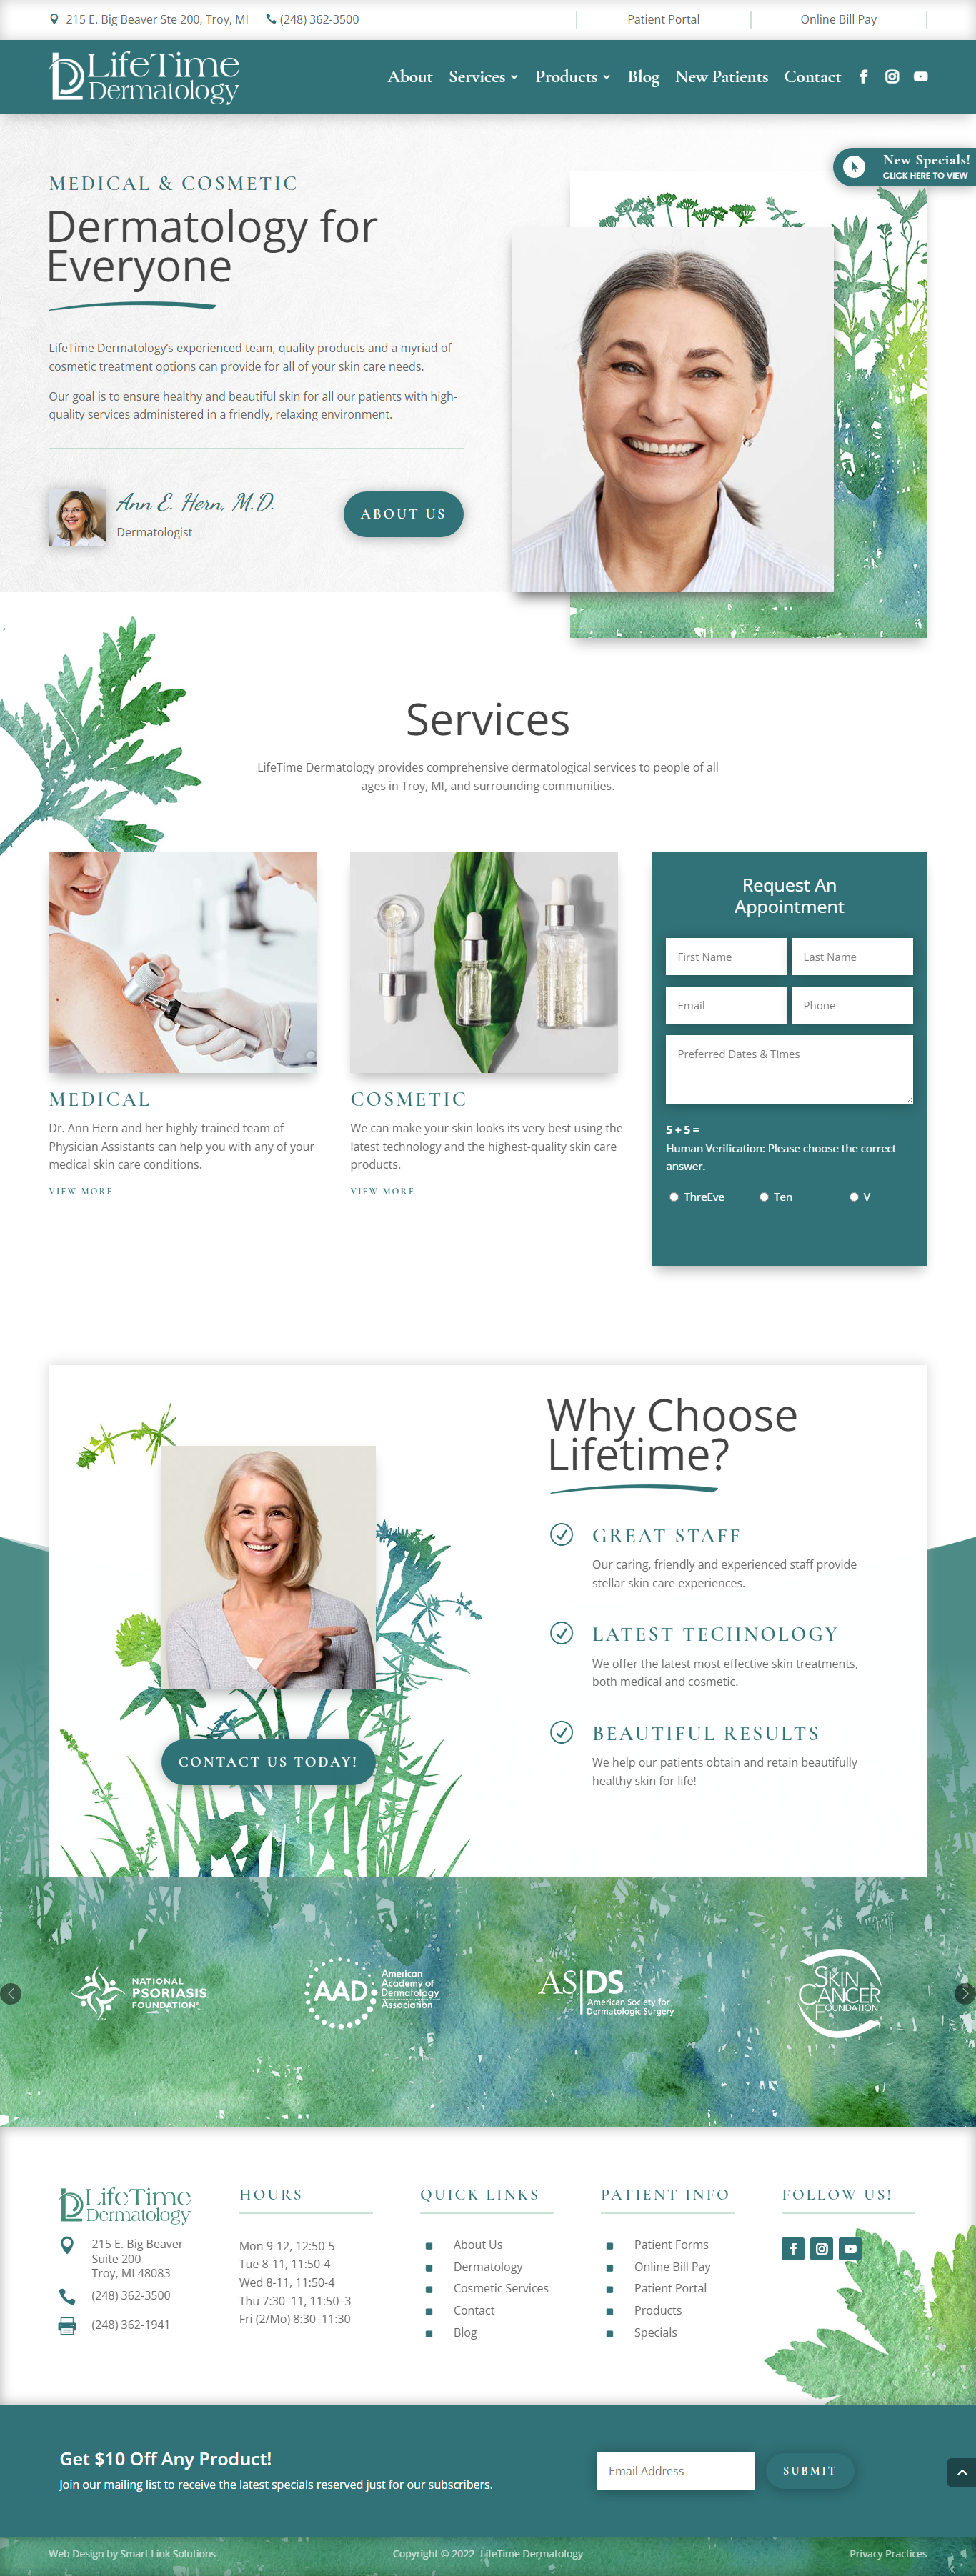 Lifetime Dermatology Homepage Screenshot